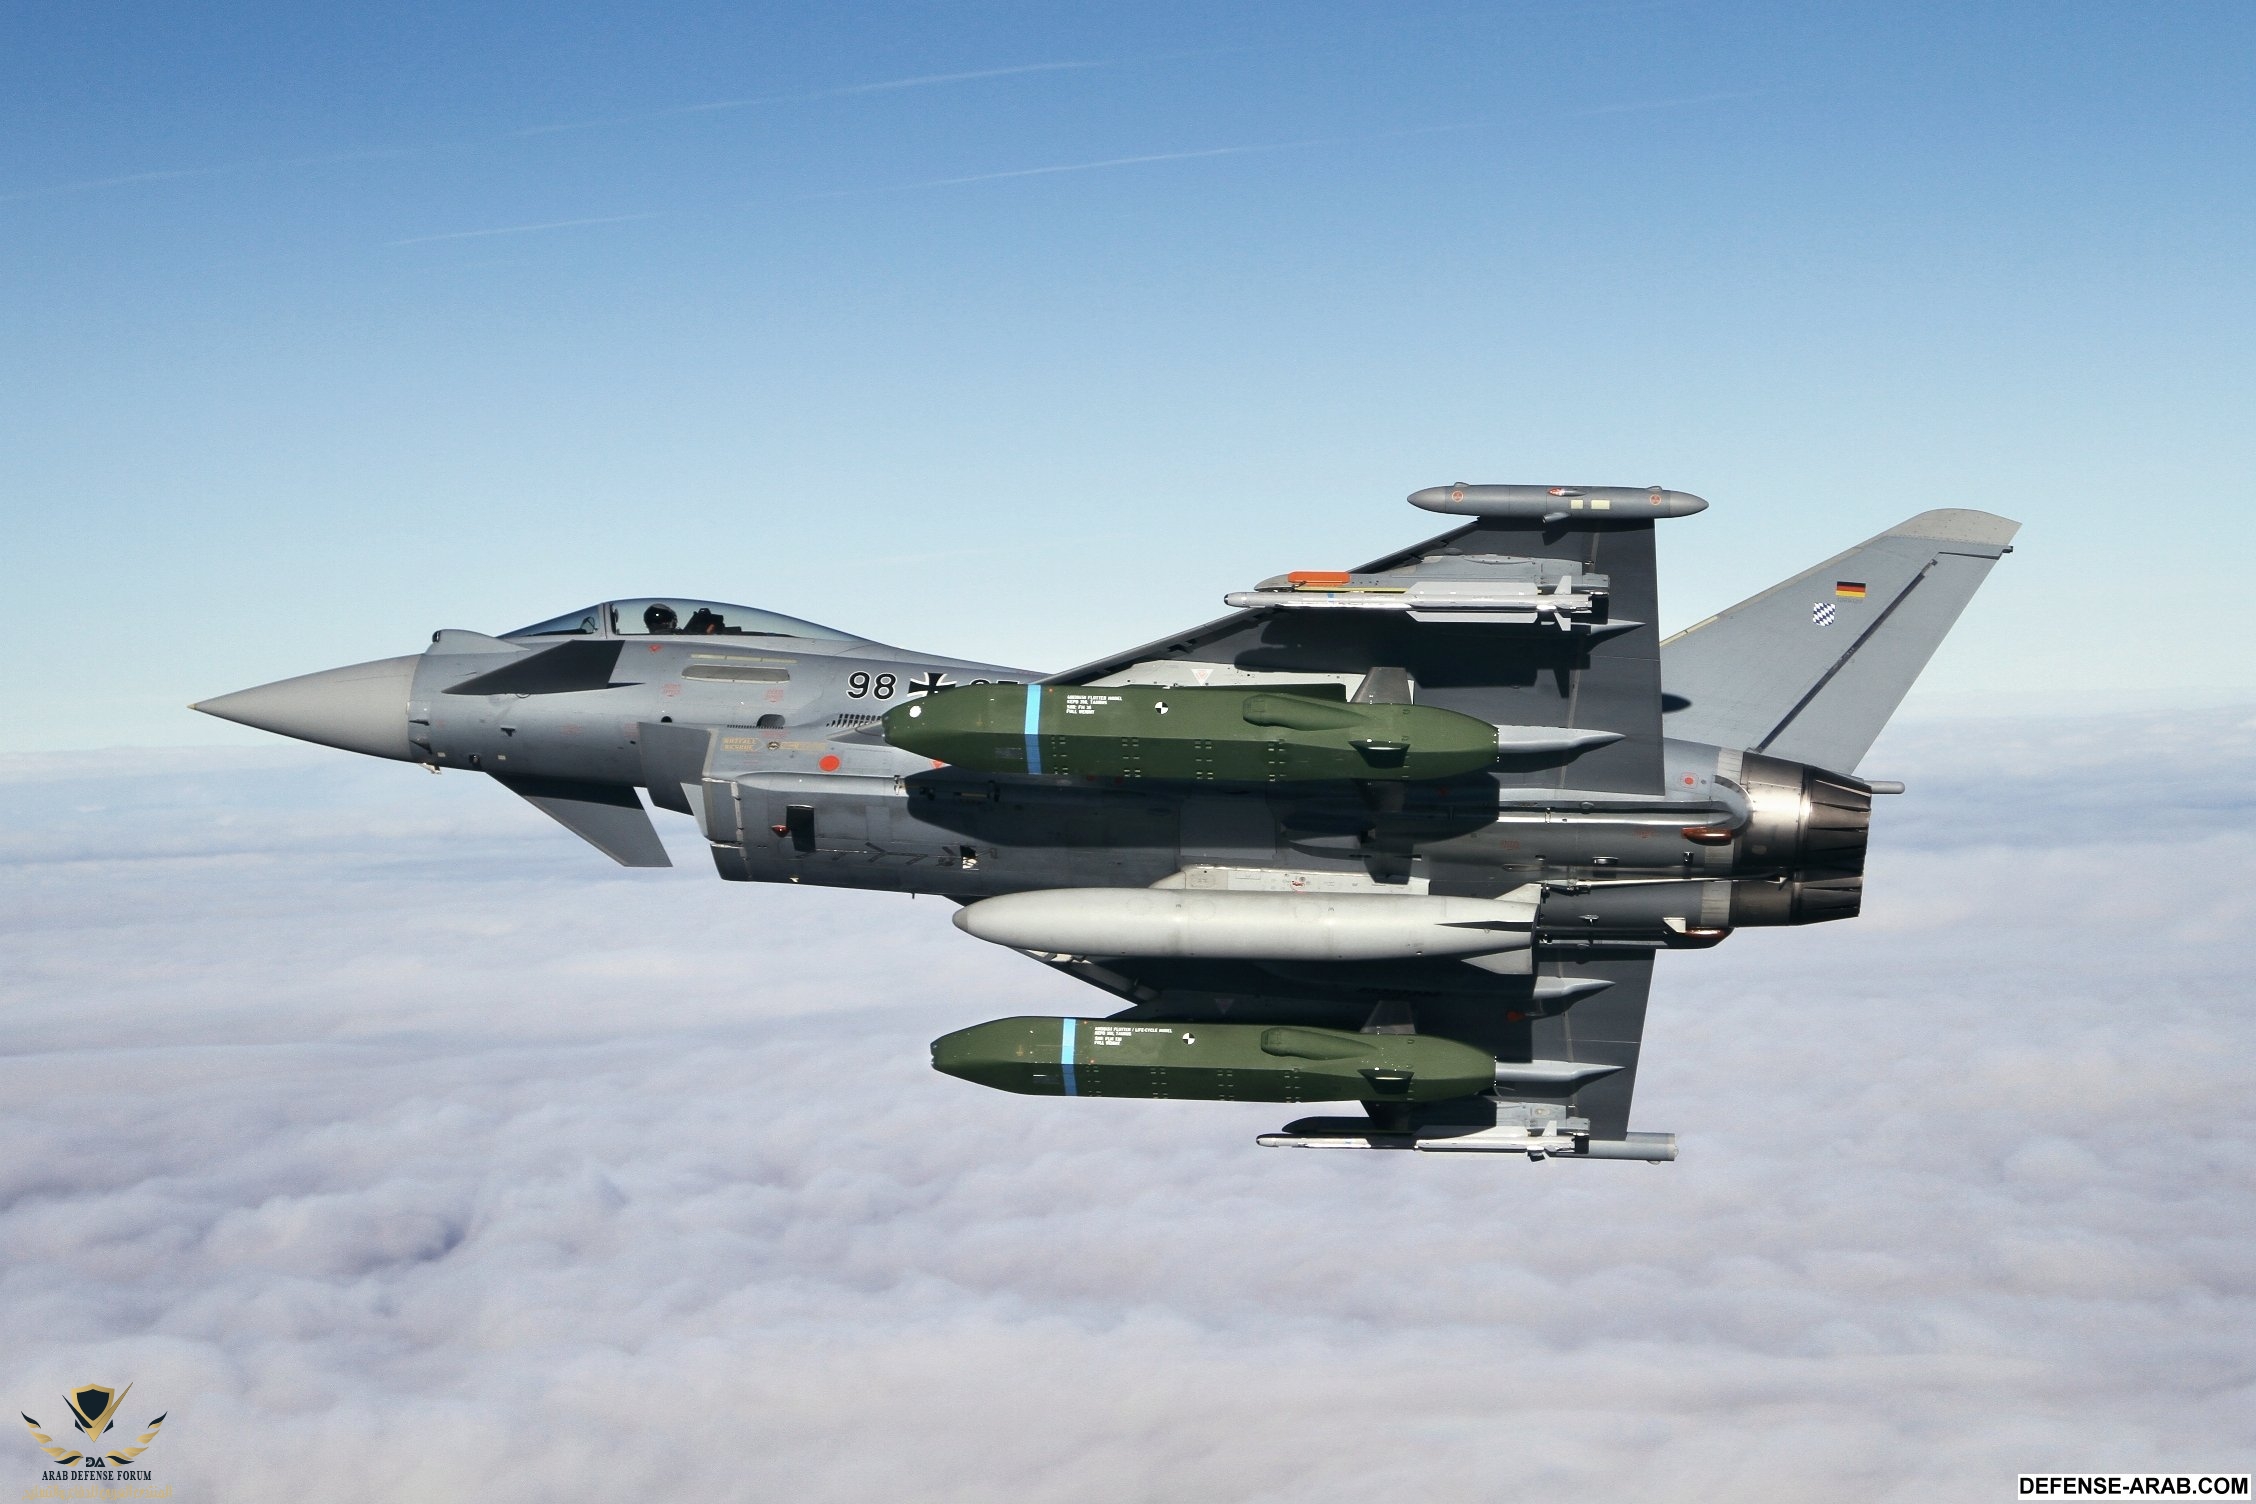 eurofighter-typhoon-flight-tests-with-taurus-kepd-350-missile-started-c-j-gietljpg-1583.jpg